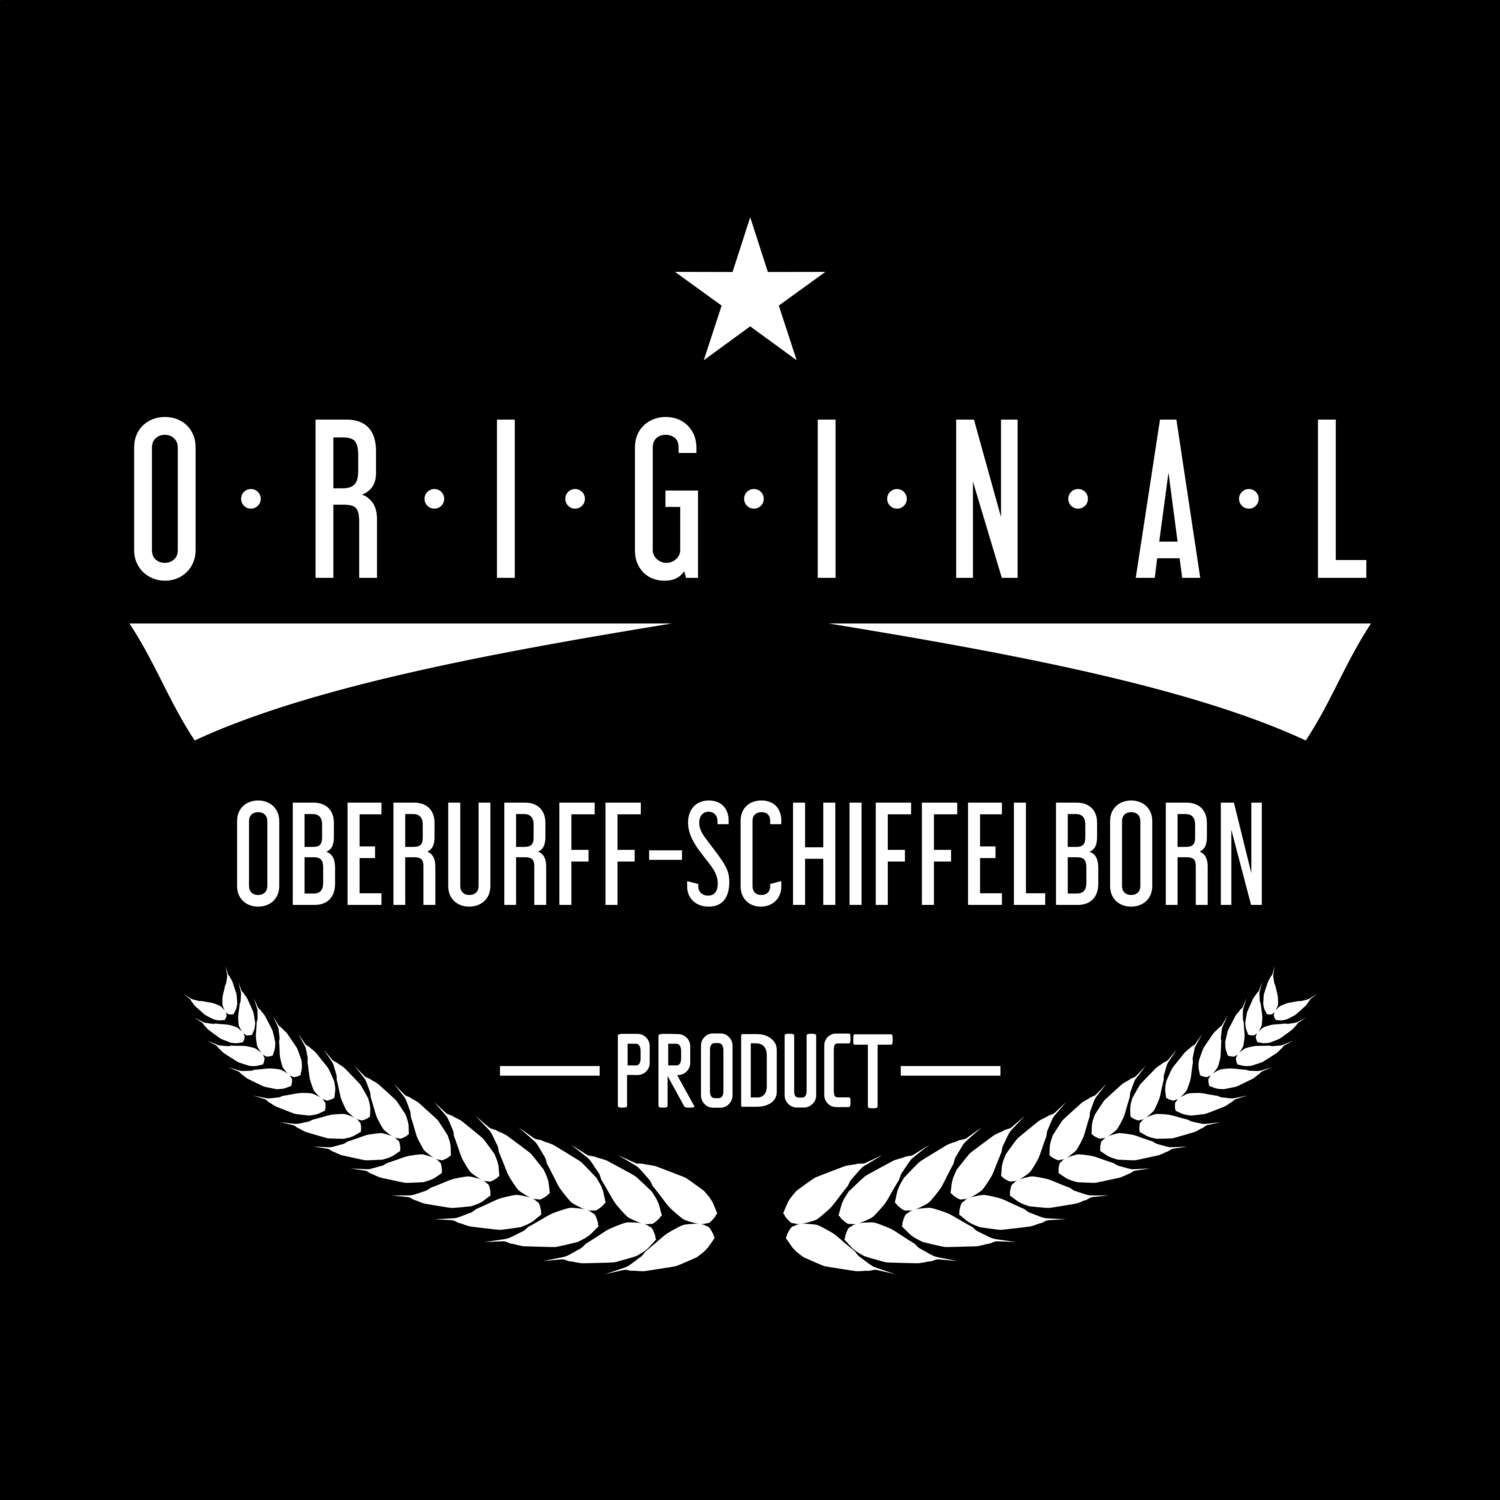 Oberurff-Schiffelborn T-Shirt »Original Product«